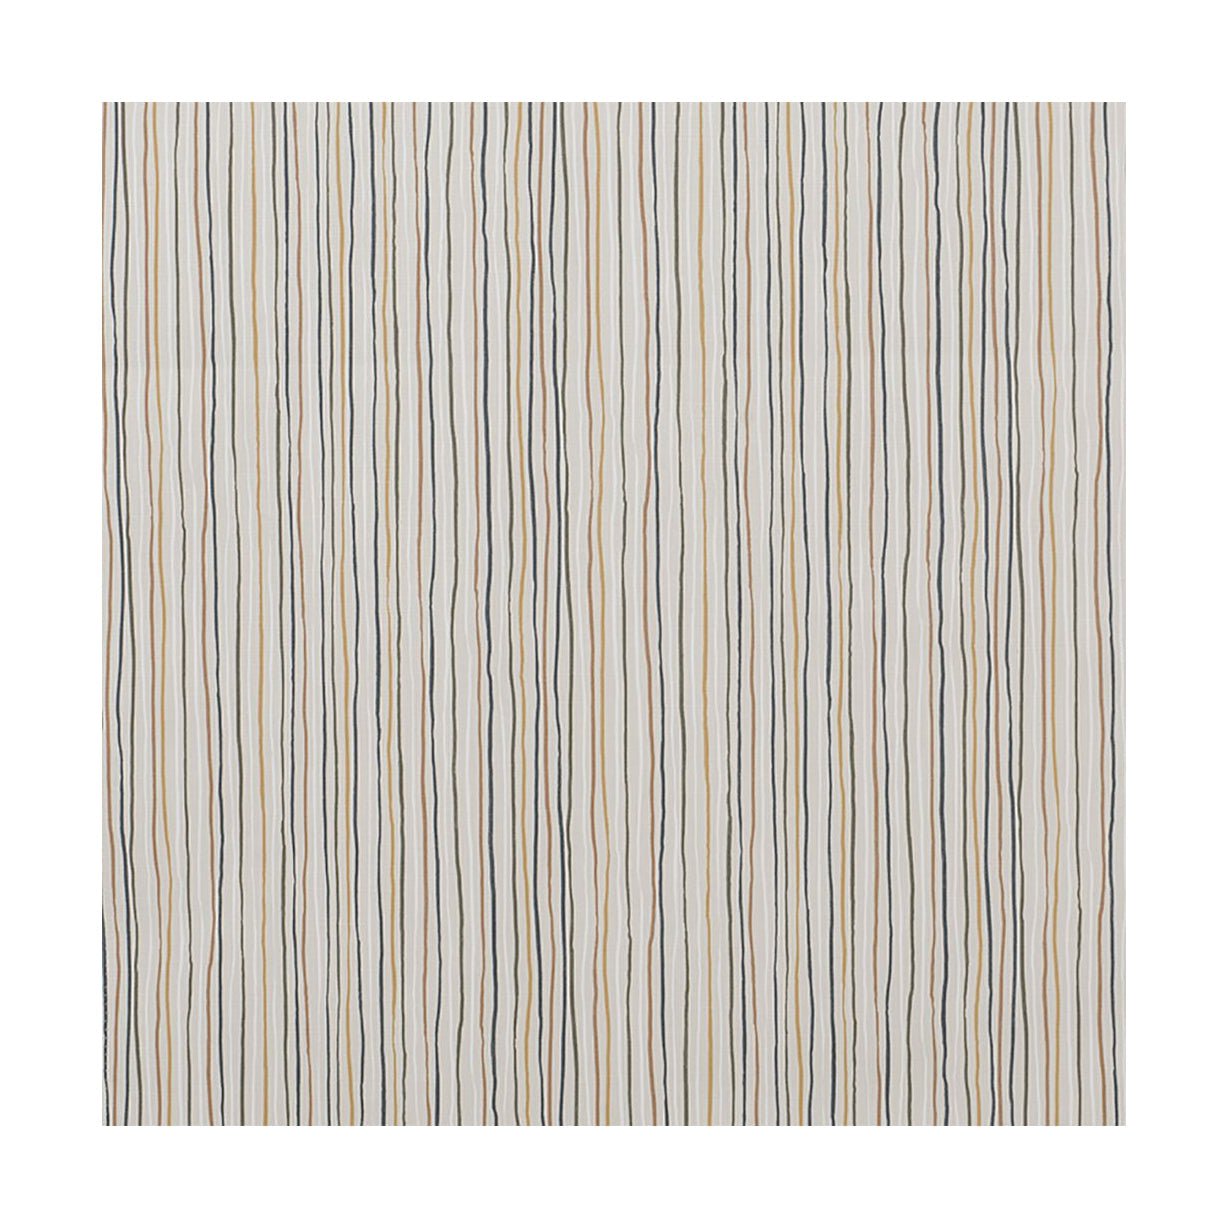 Spira Stripe Ctc Fabric With Acrylic Width 145 Cm (Price Per Meter), Multicolored